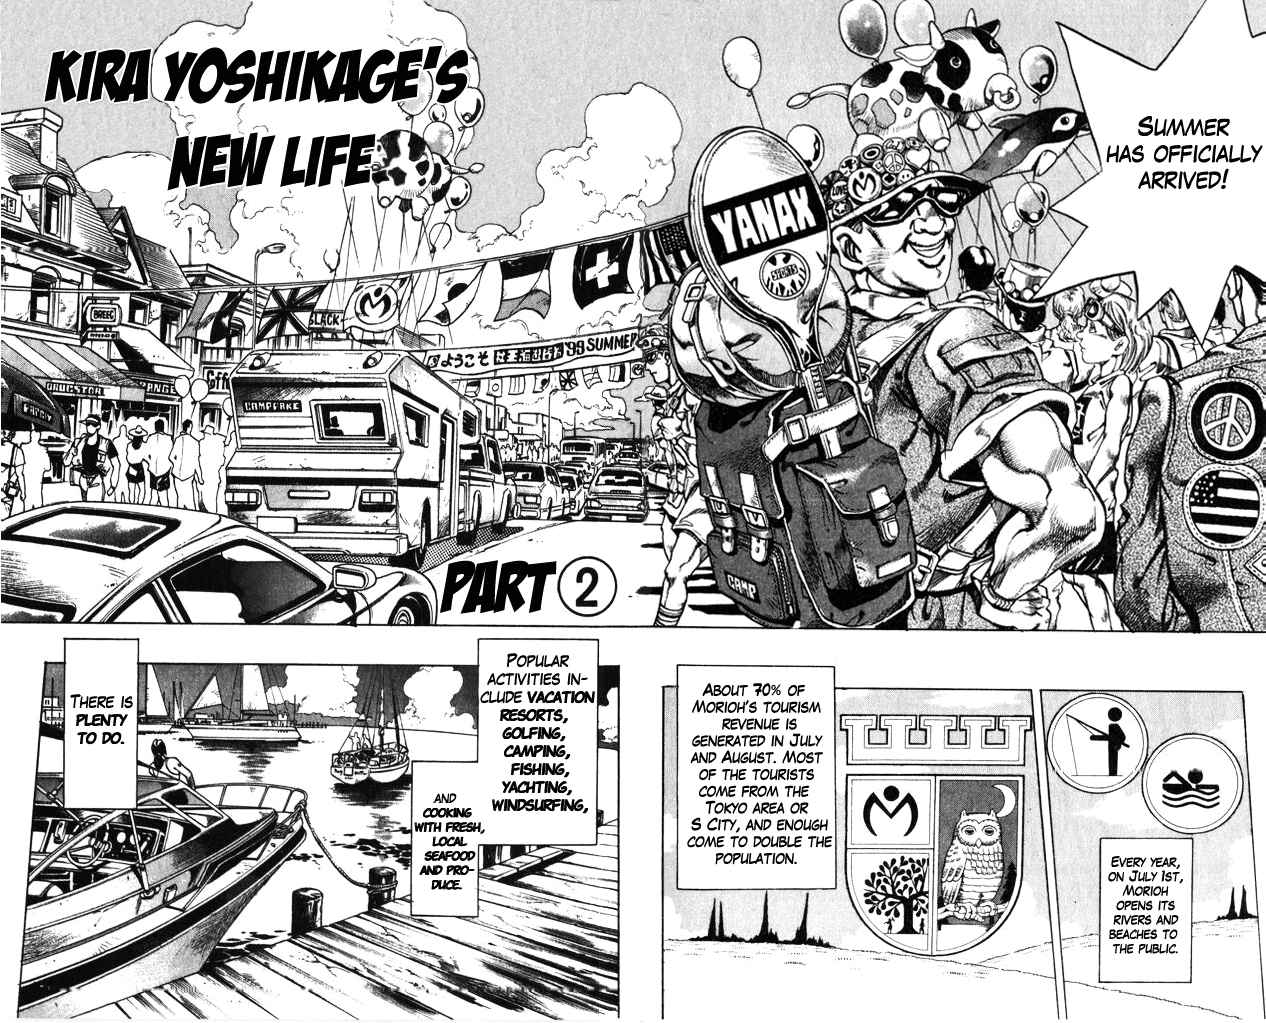 JoJo's Bizarre Adventure Part 4 Diamond is Unbreakable Vol. 12 Ch. 112 Yoshikage Kira's New Life Part 2